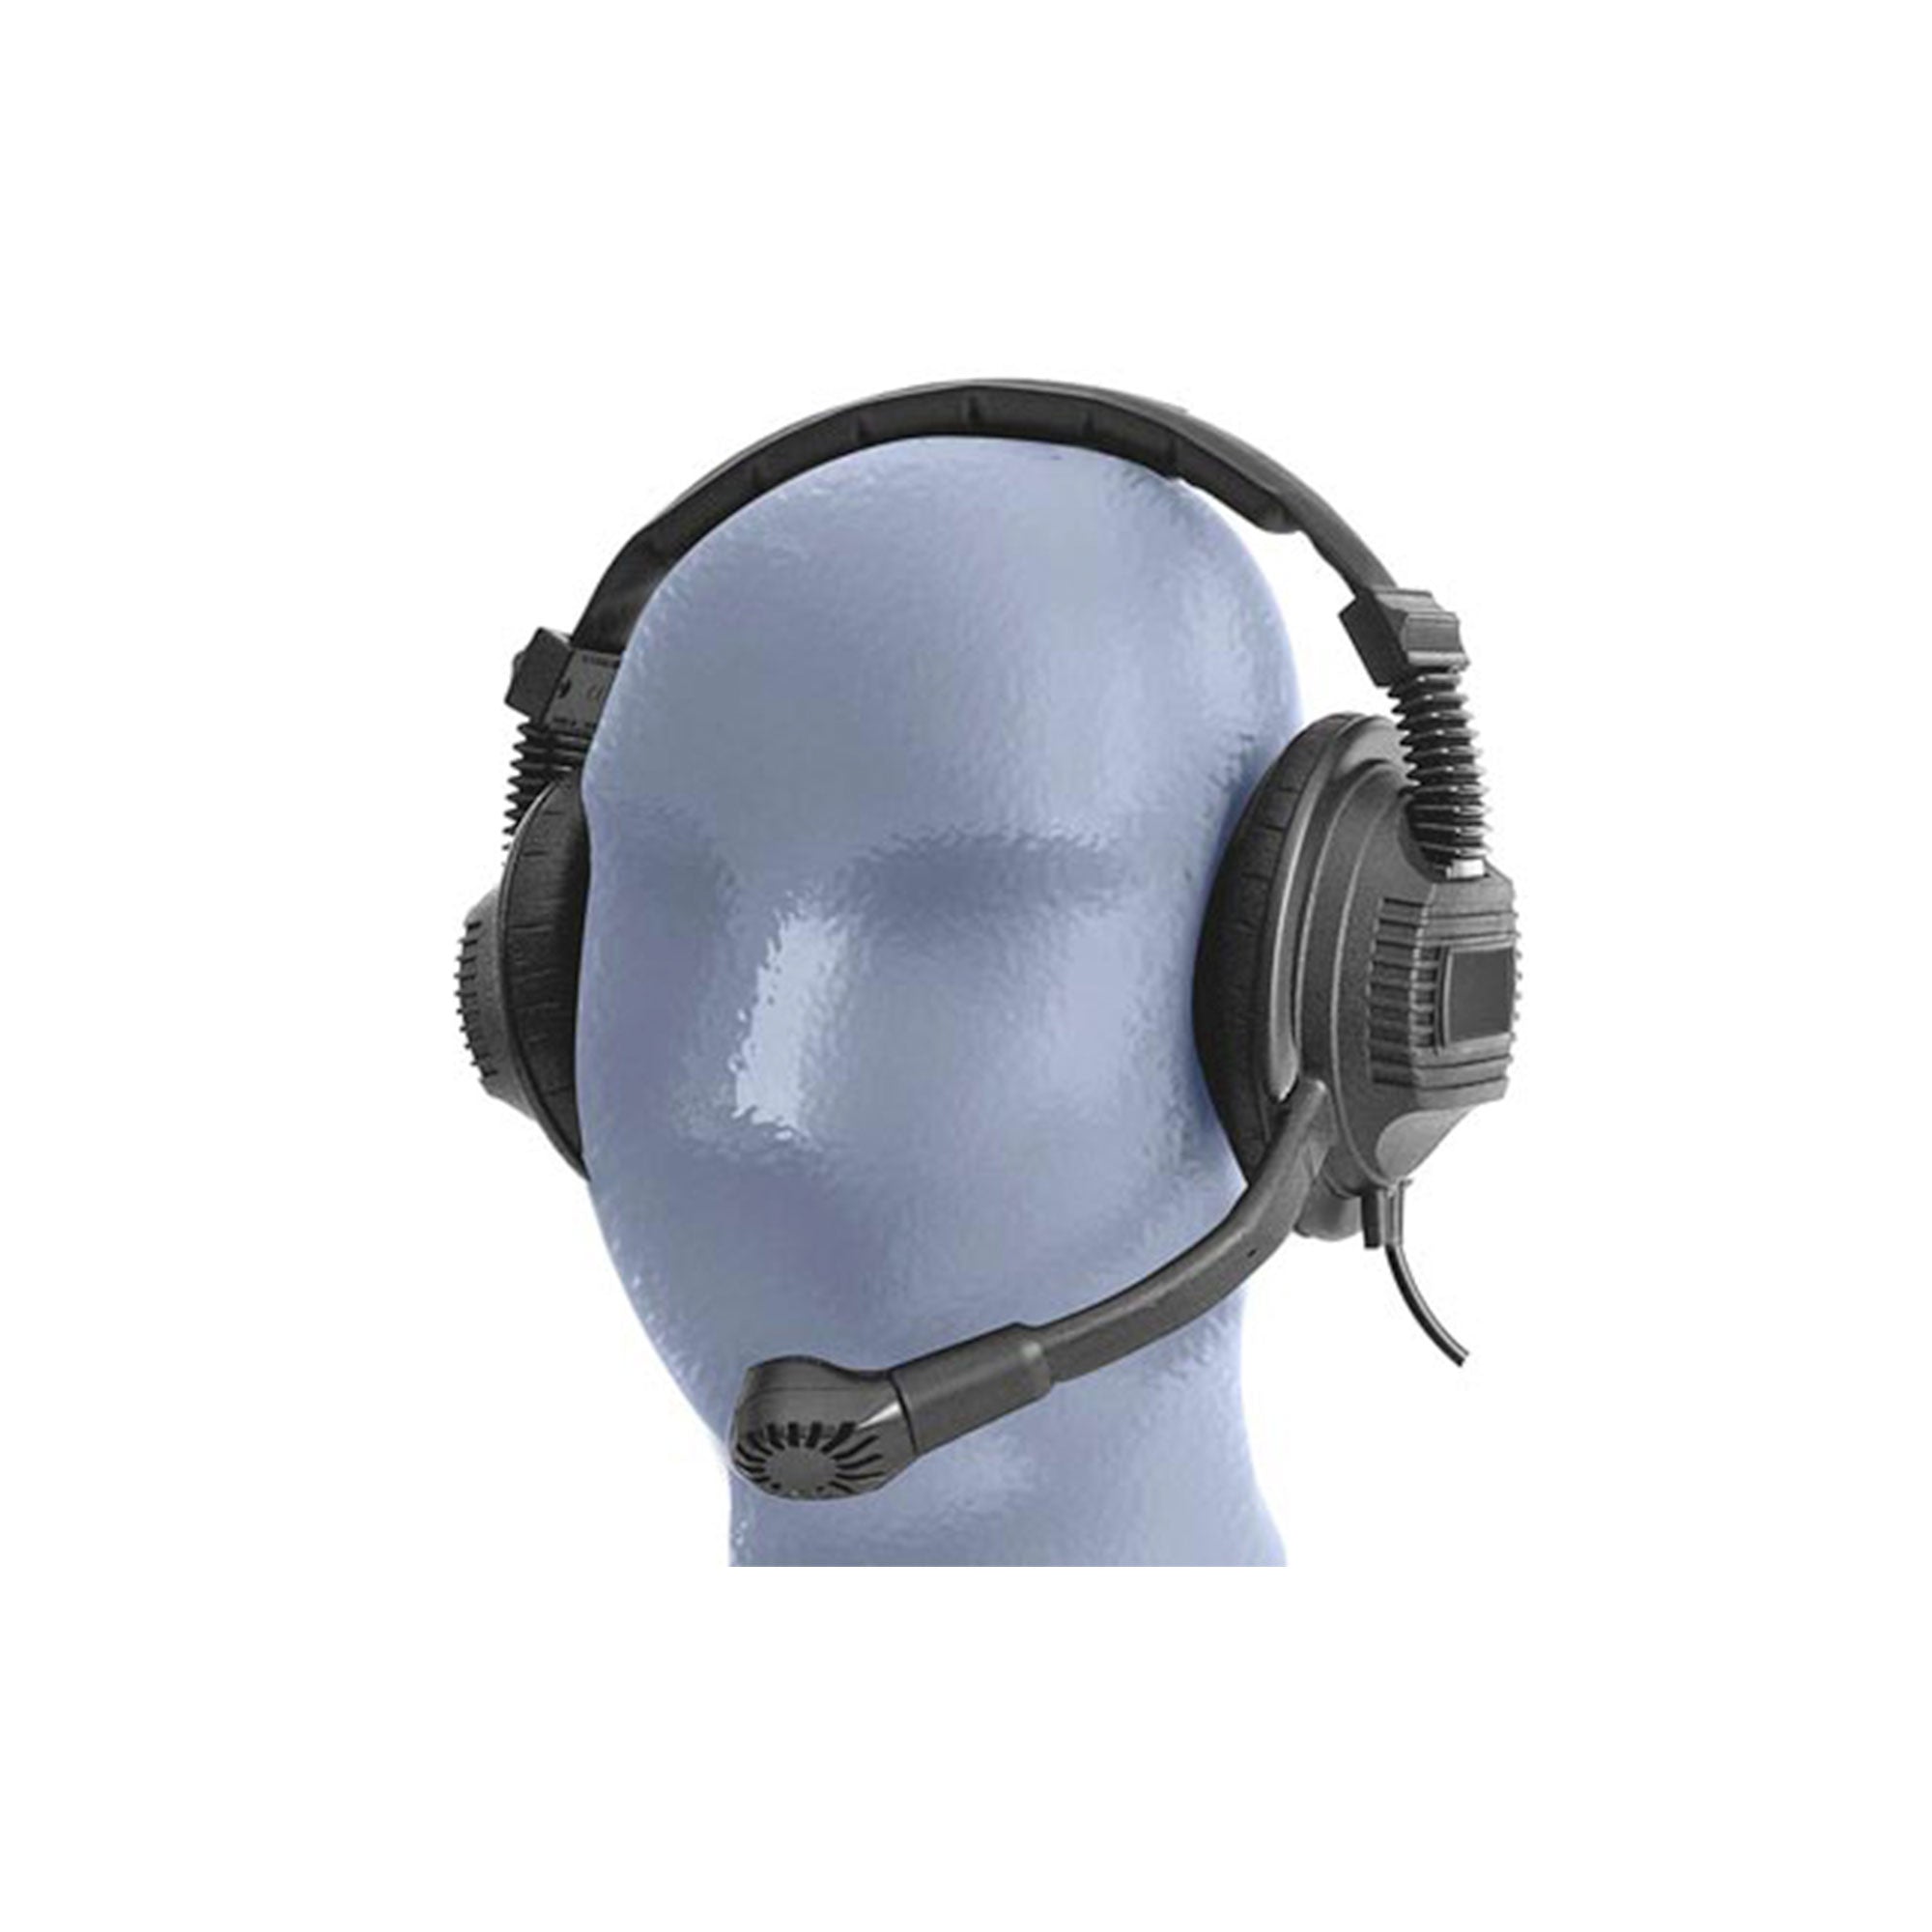 Axxent MBK D800 2 Ear Communication Headset